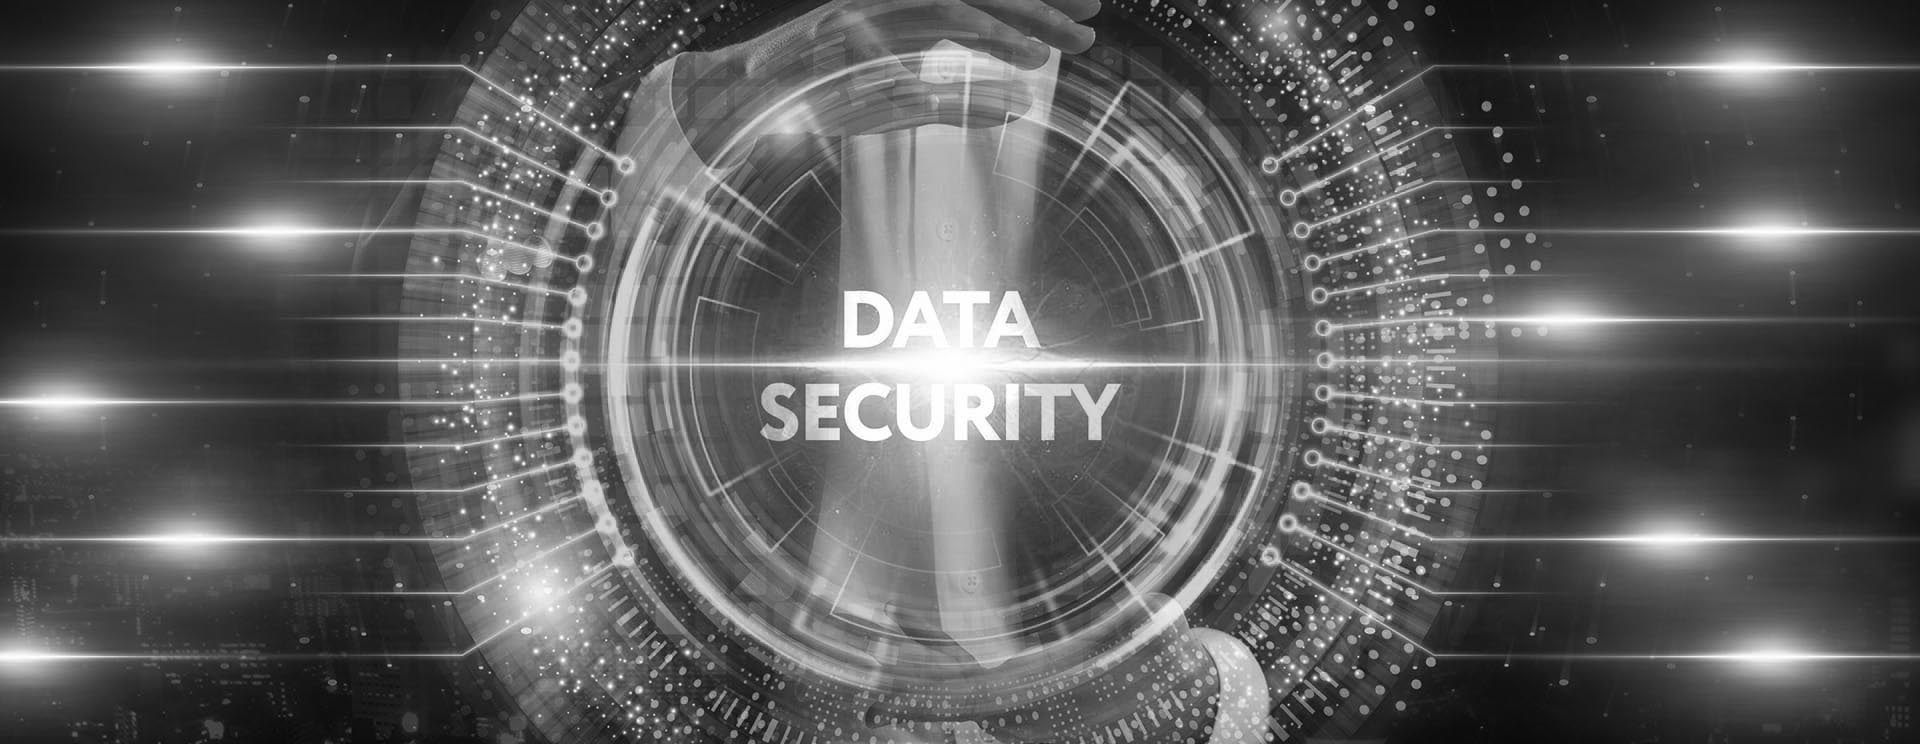 Data Security 